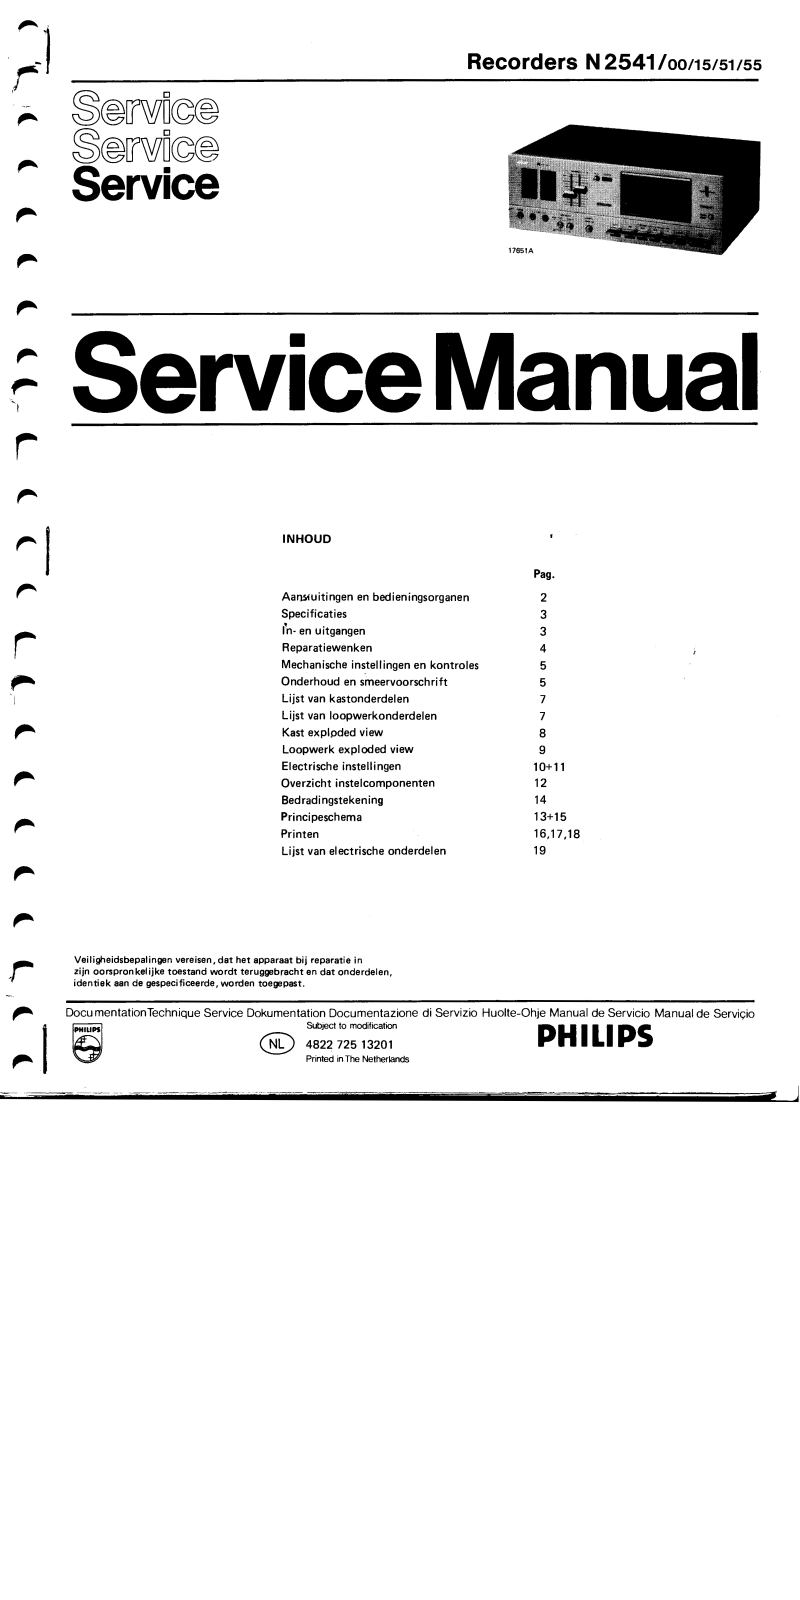 Philips N-2541 Service Manual